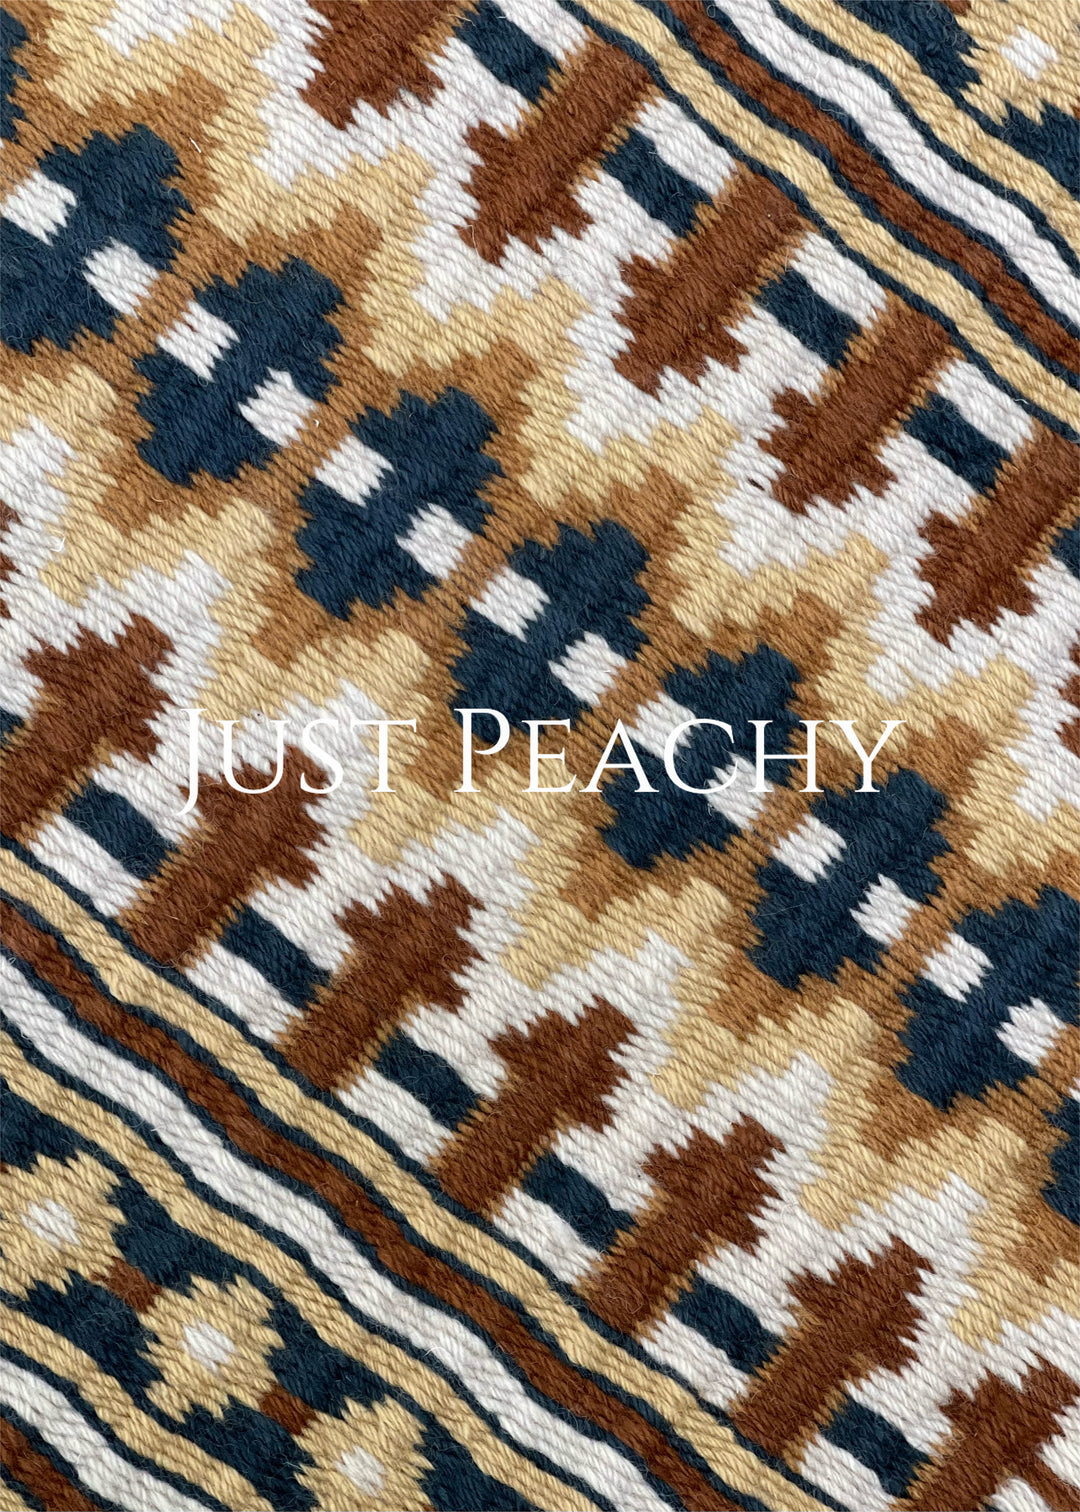 Just Peachy Premier Western Show Blanket ~ The Kaycee #856